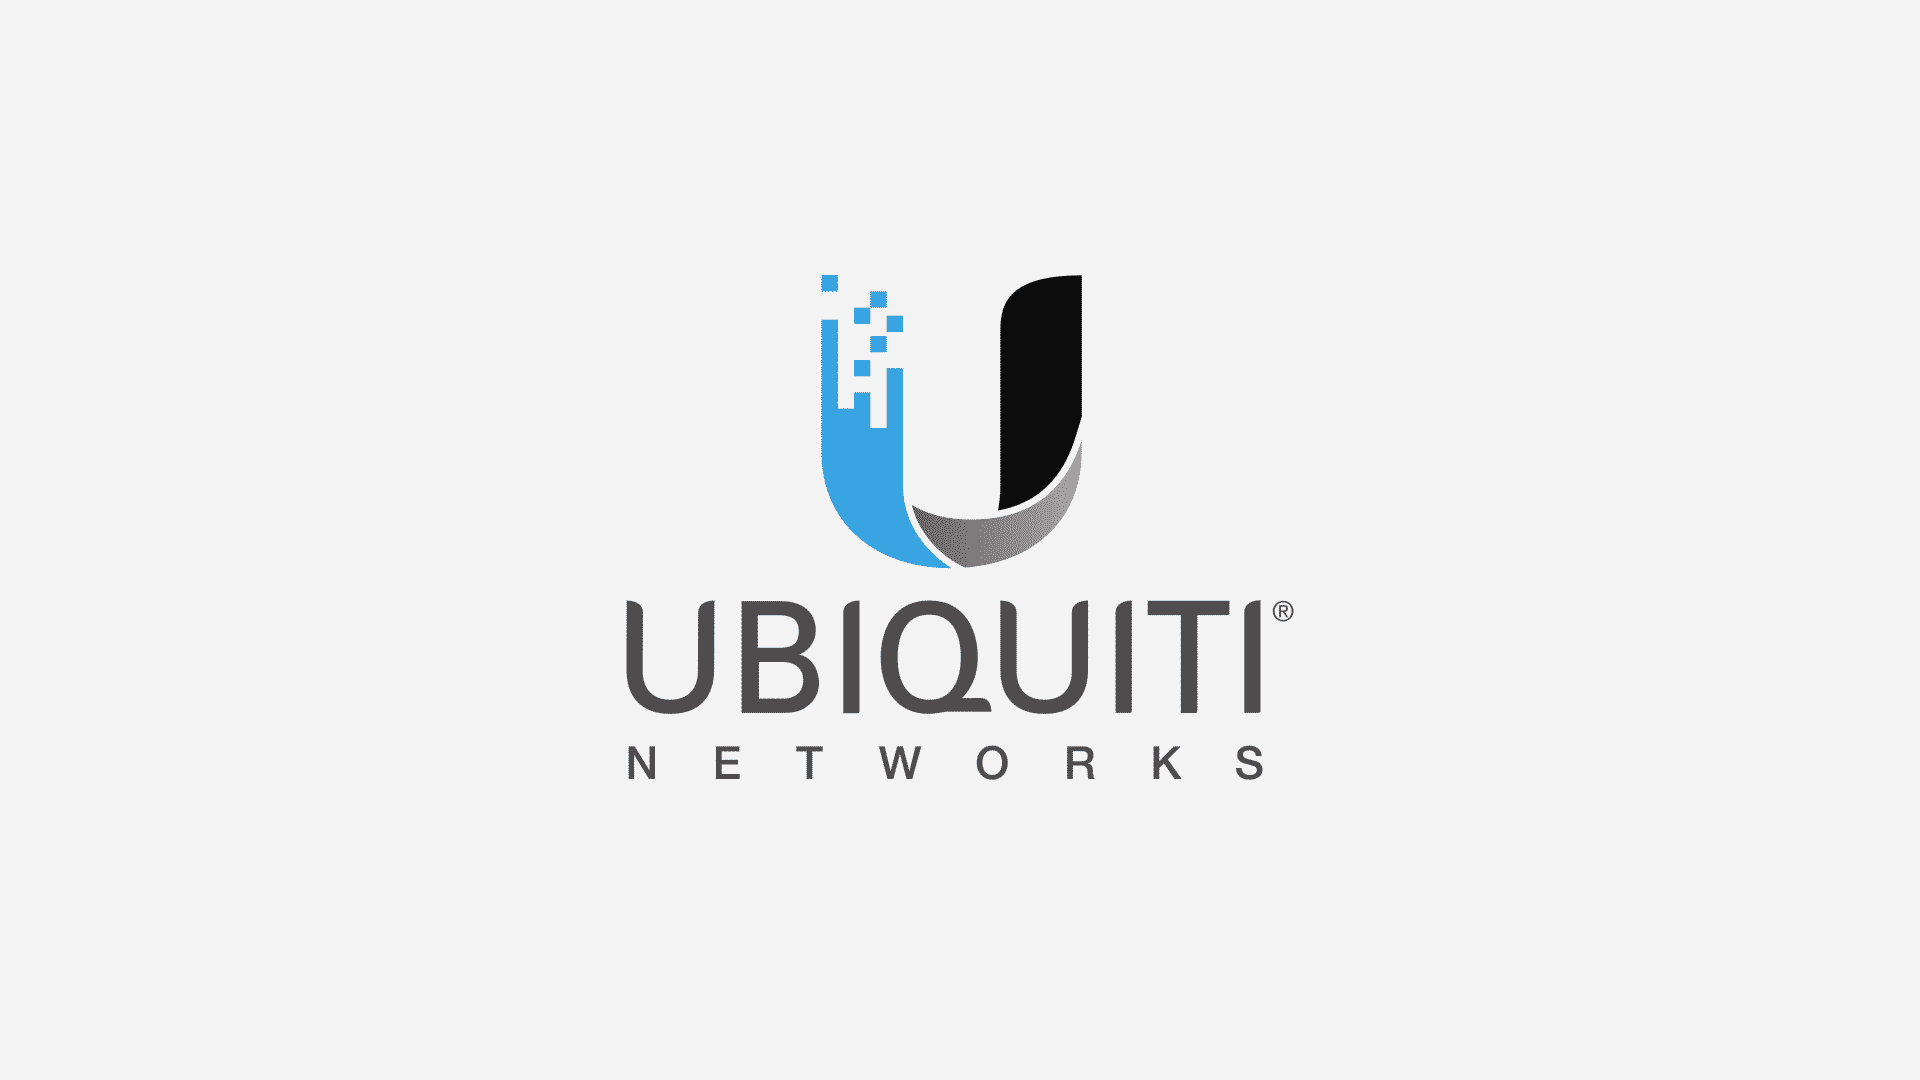 ubiquiti network, unifi controller